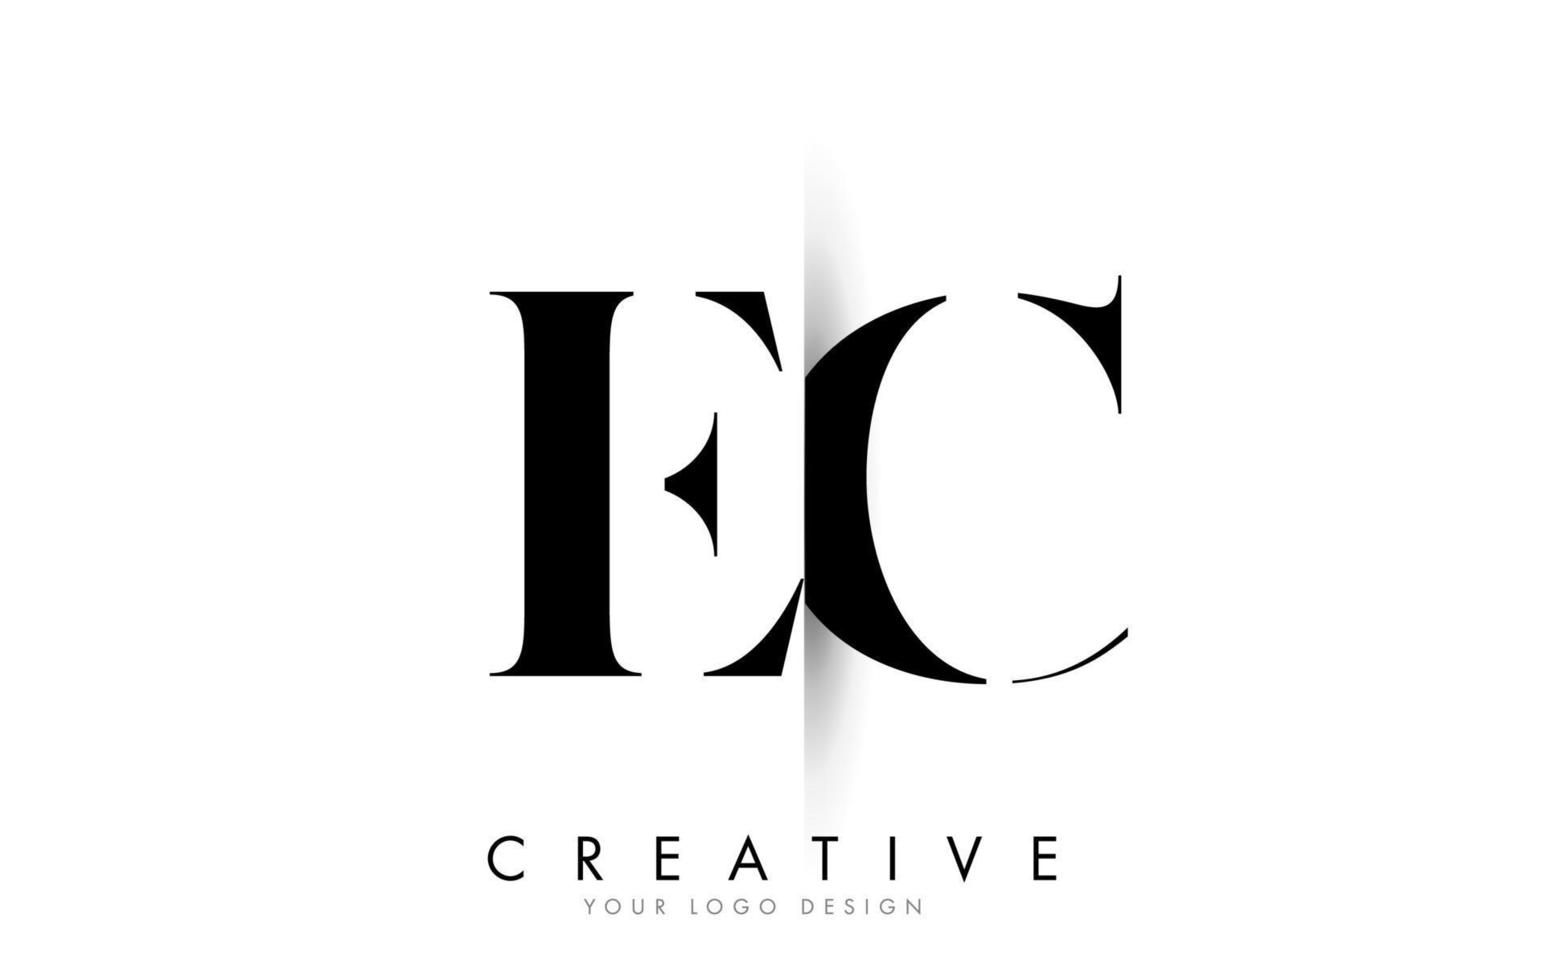 EC E C Letter Logo with Creative Shadow Cut Design. vector